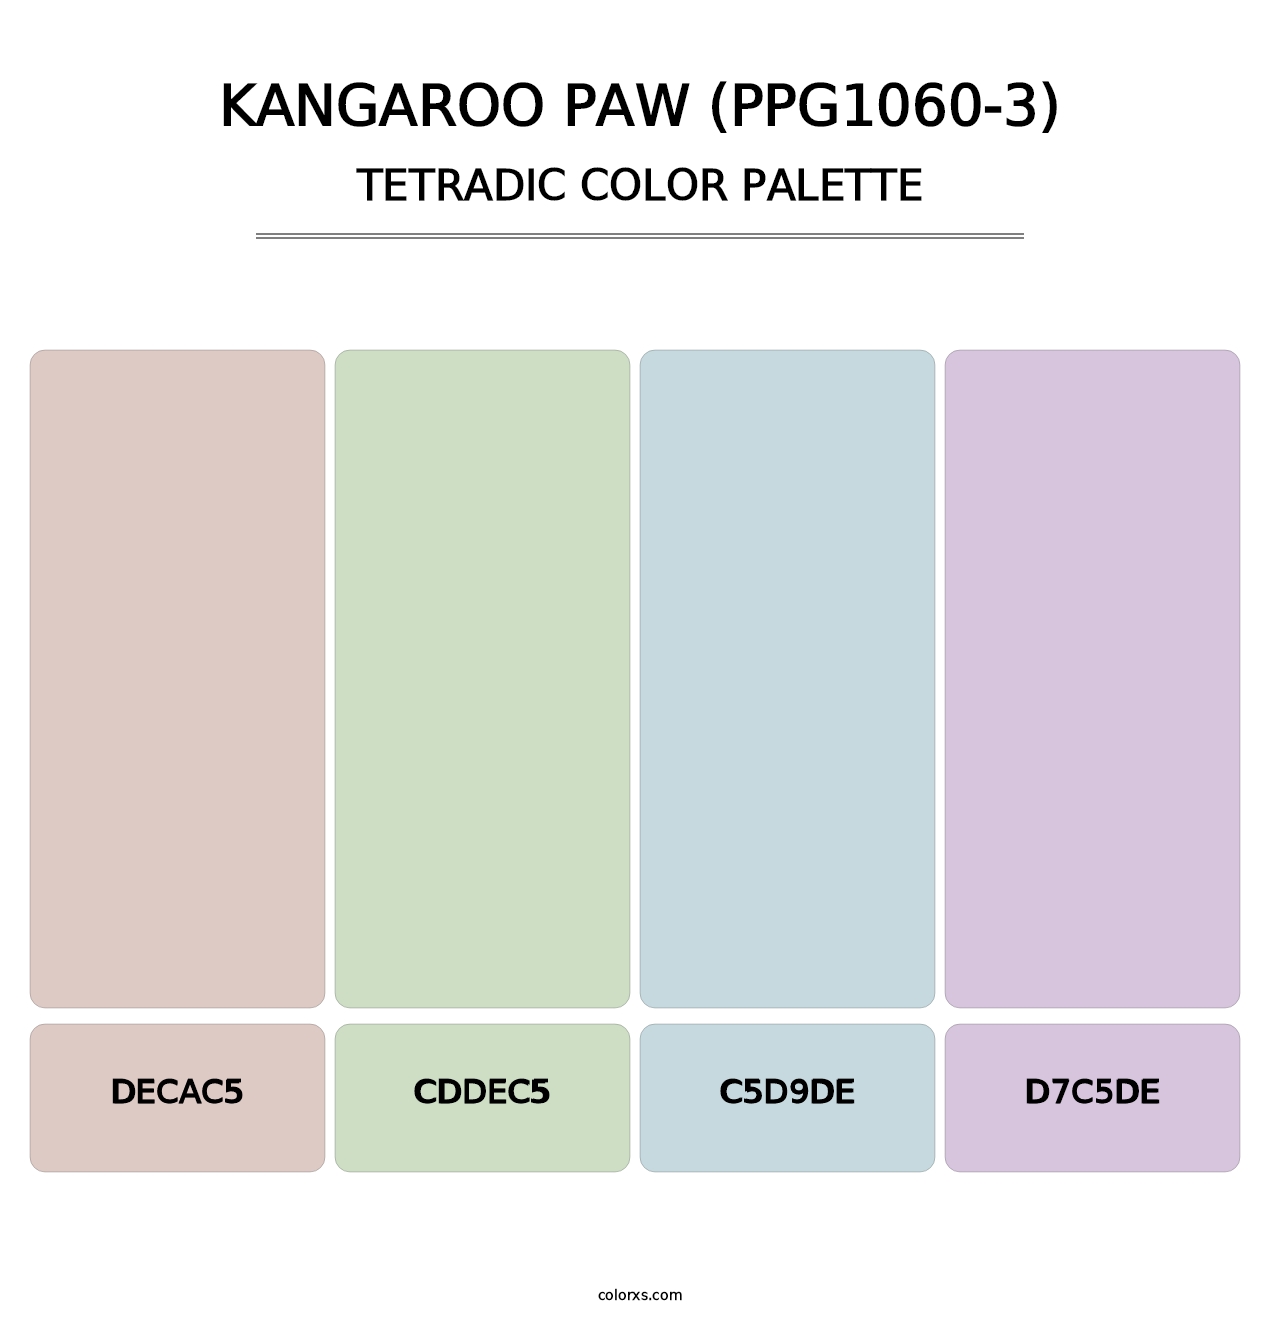 Kangaroo Paw (PPG1060-3) - Tetradic Color Palette